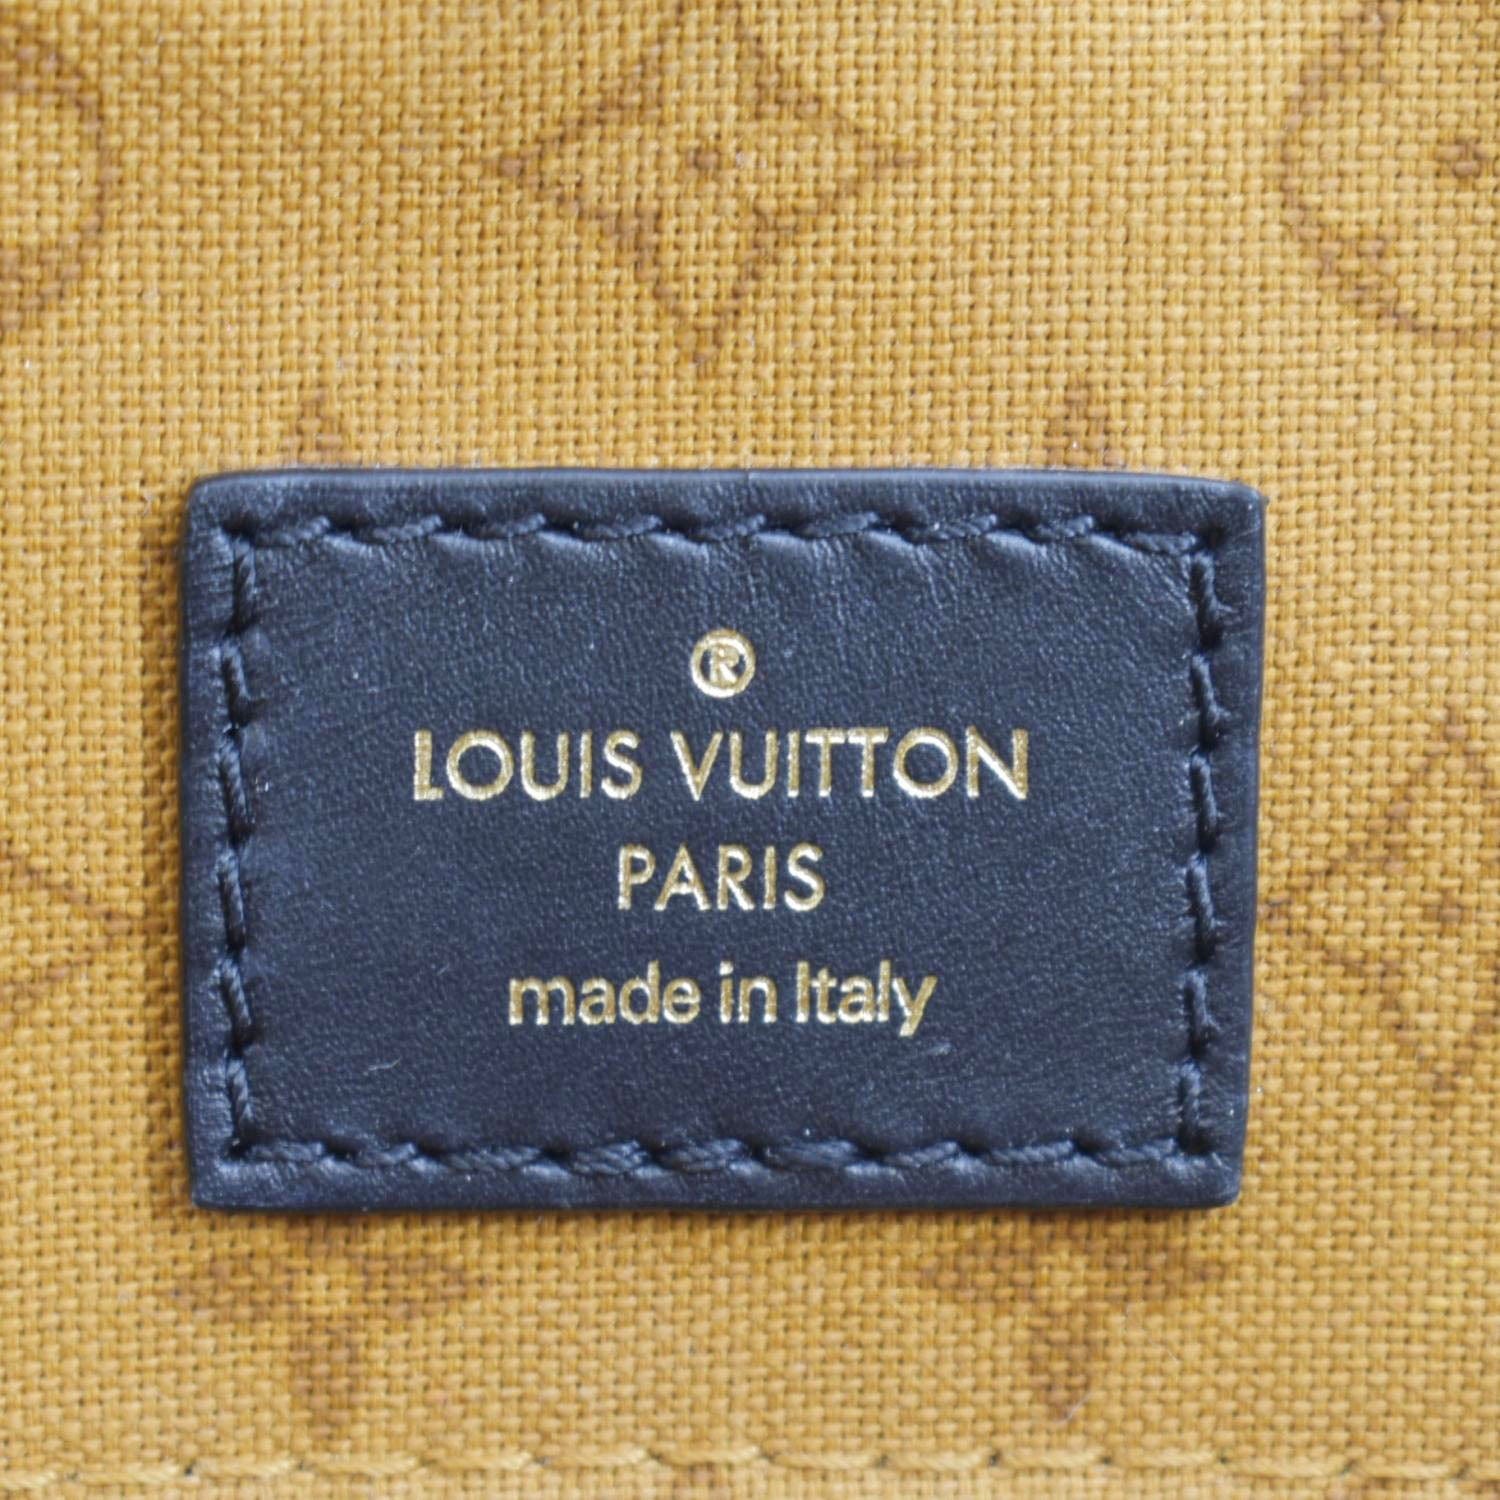 Louis Vuitton OnTheGo GM Crafty – Now You Glow